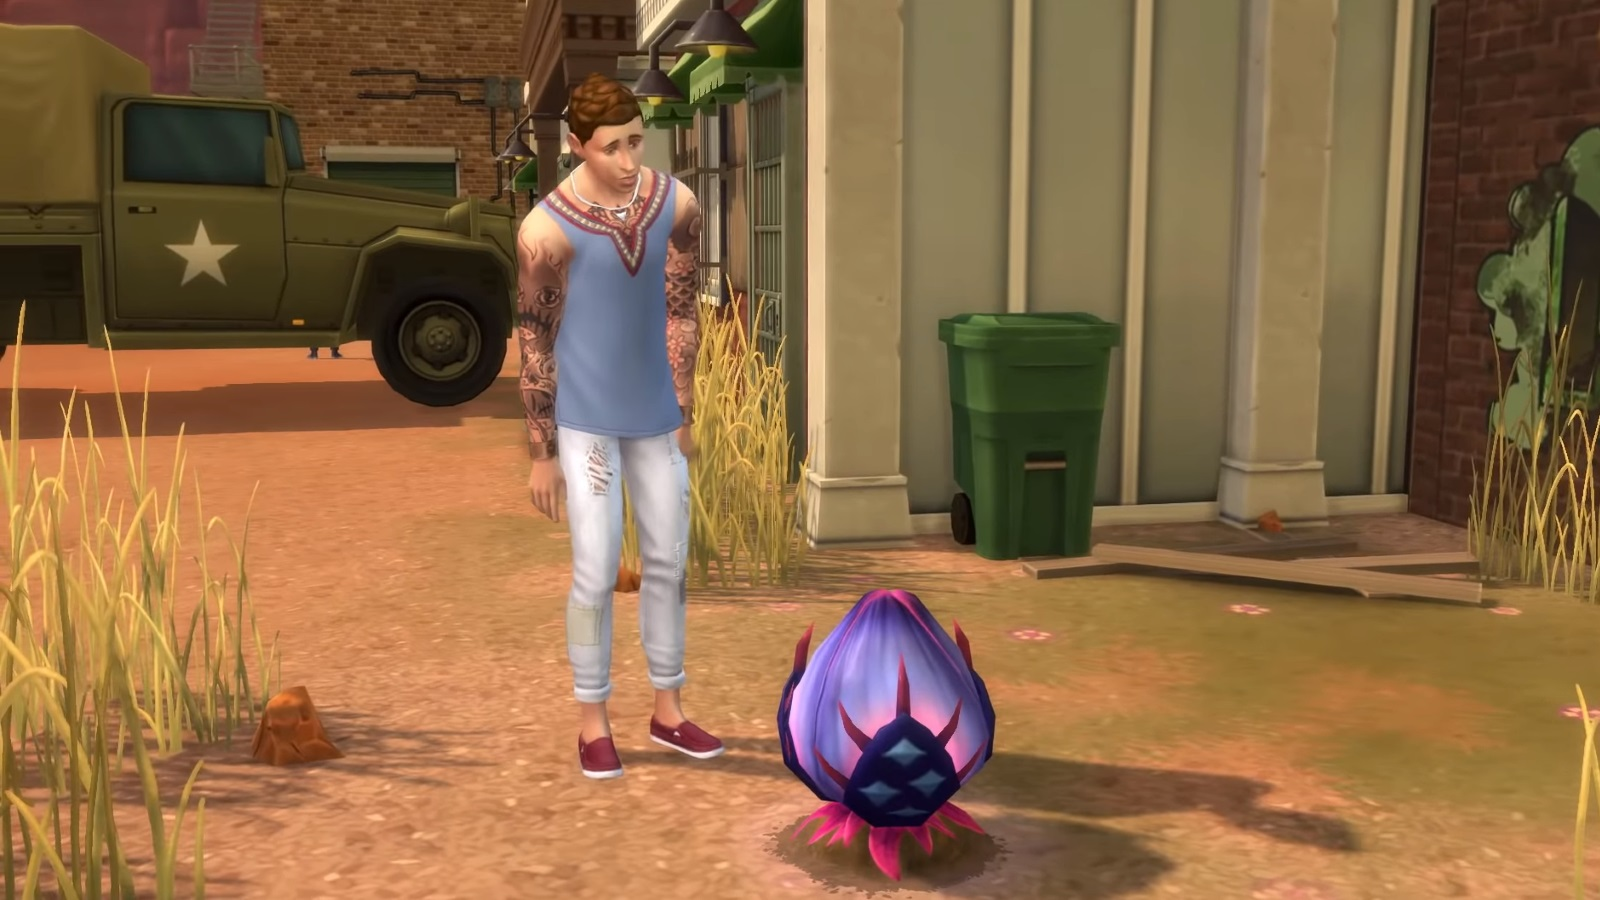 The Sims 4: StrangerVille, PC Mac